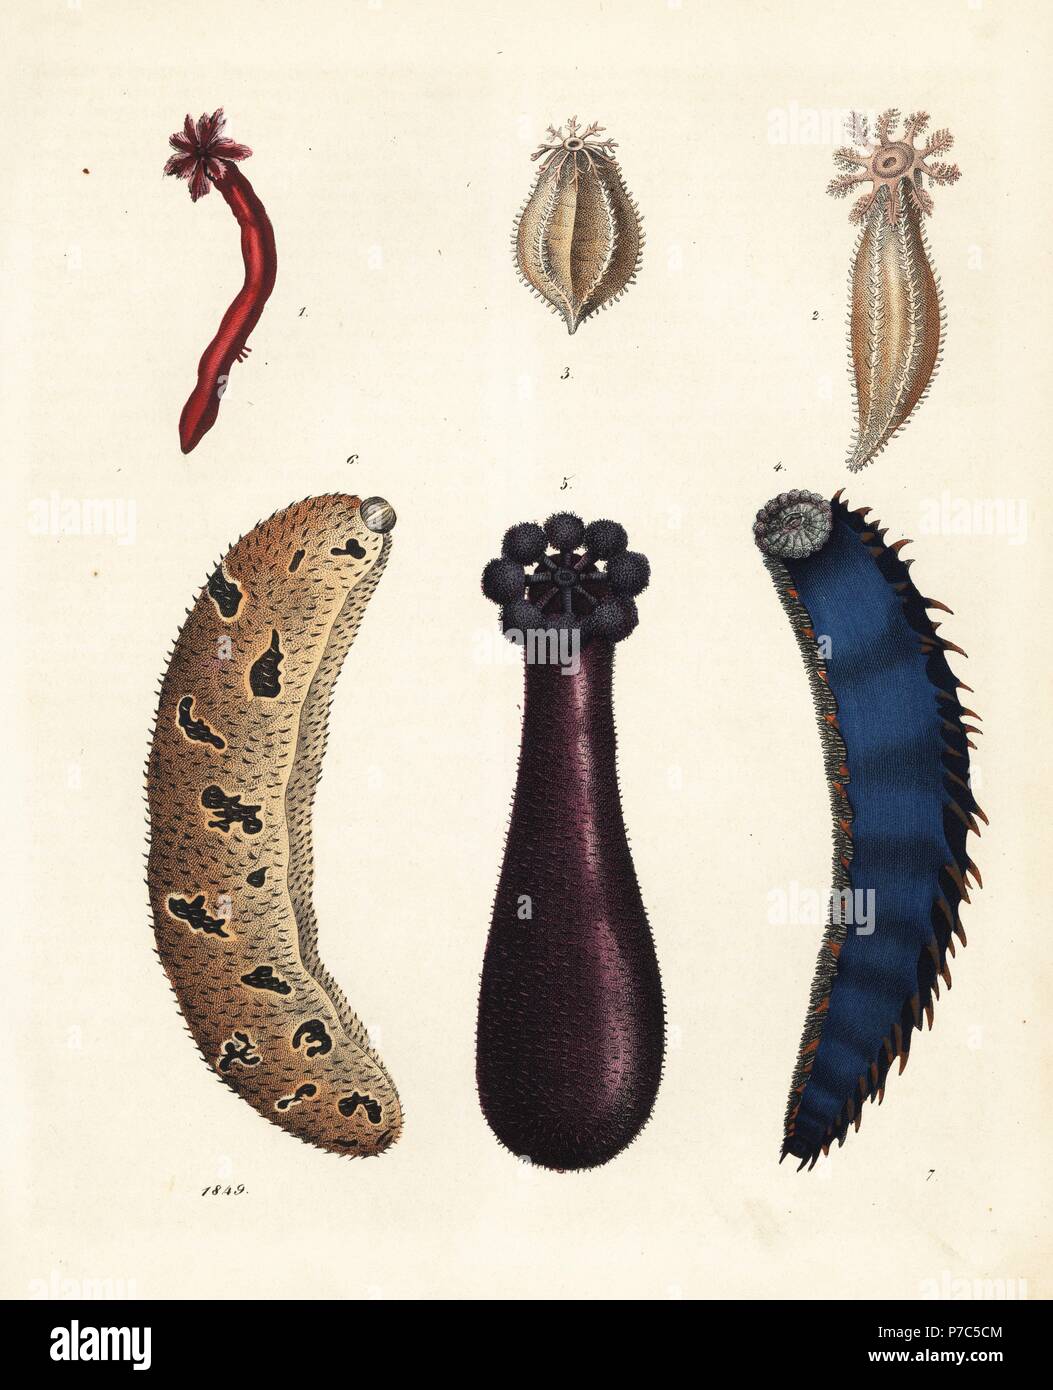 Sea cucumbers: Trochodota purpurea 1,2, Cladodactyla crocea crocea 3, Stichopus chloronotus 4, Anaperus peruvianus 5, and Holothuria (Metriatyla) lessoni 6. Handcoloured lithograph from Carl Hoffmann's Book of the World, Stuttgart, 1849. Stock Photo